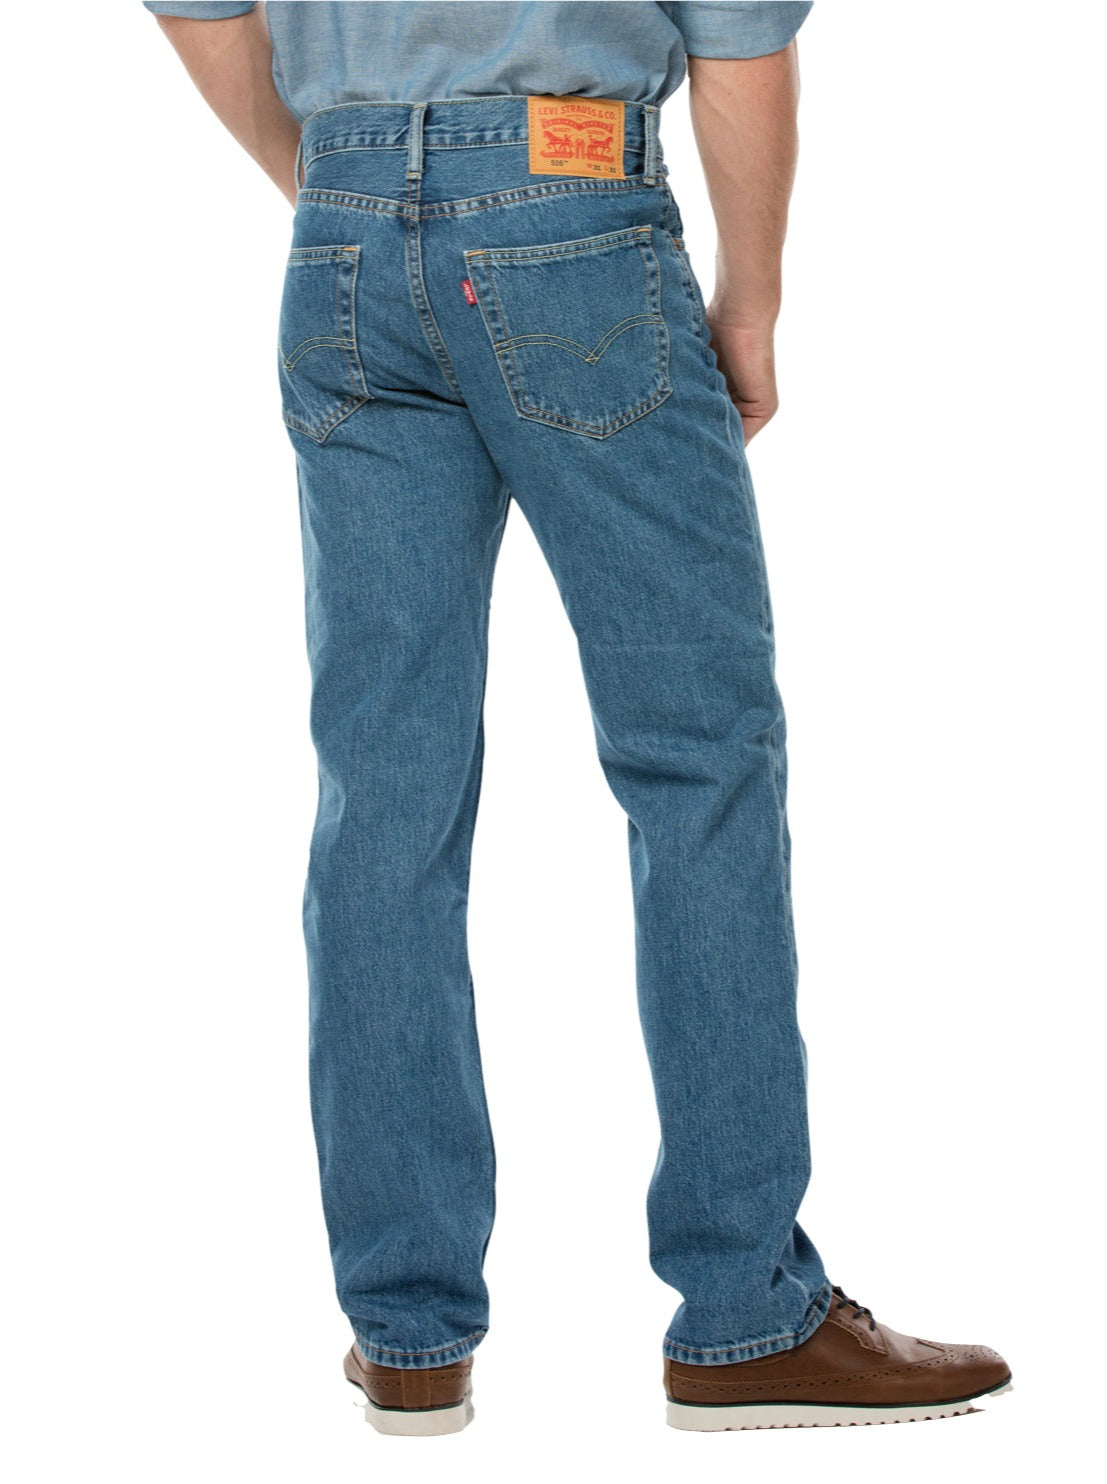 Levi's 516 Straight – 88 Jeans